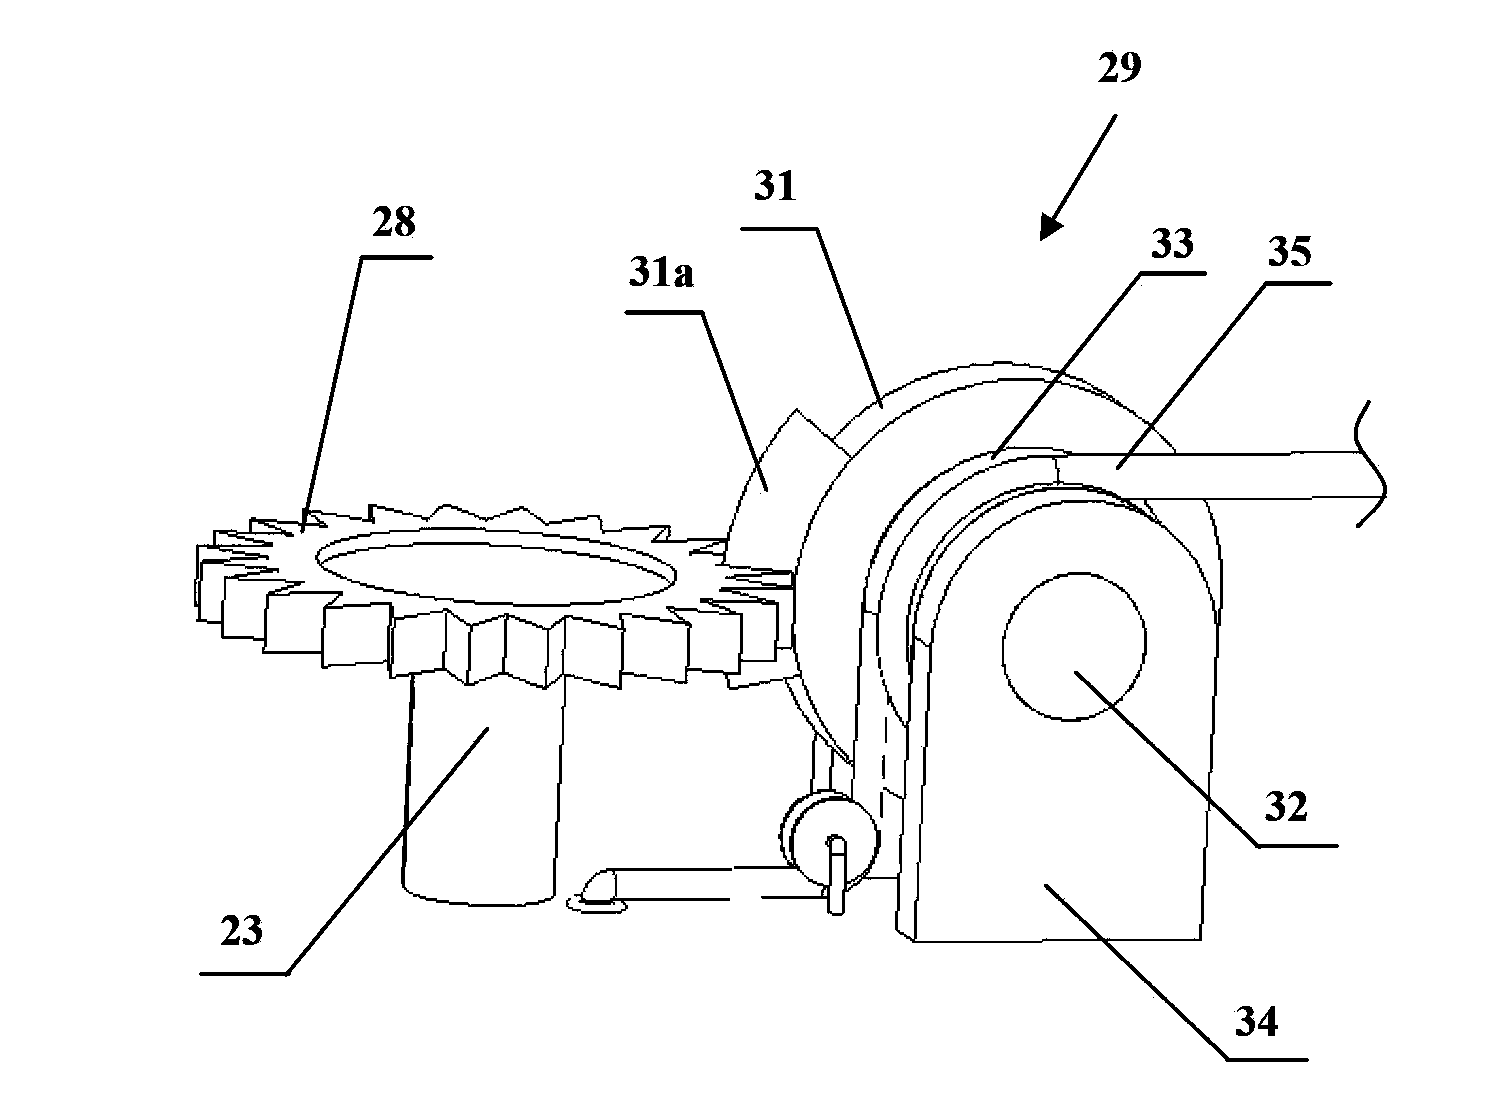 Air valve device